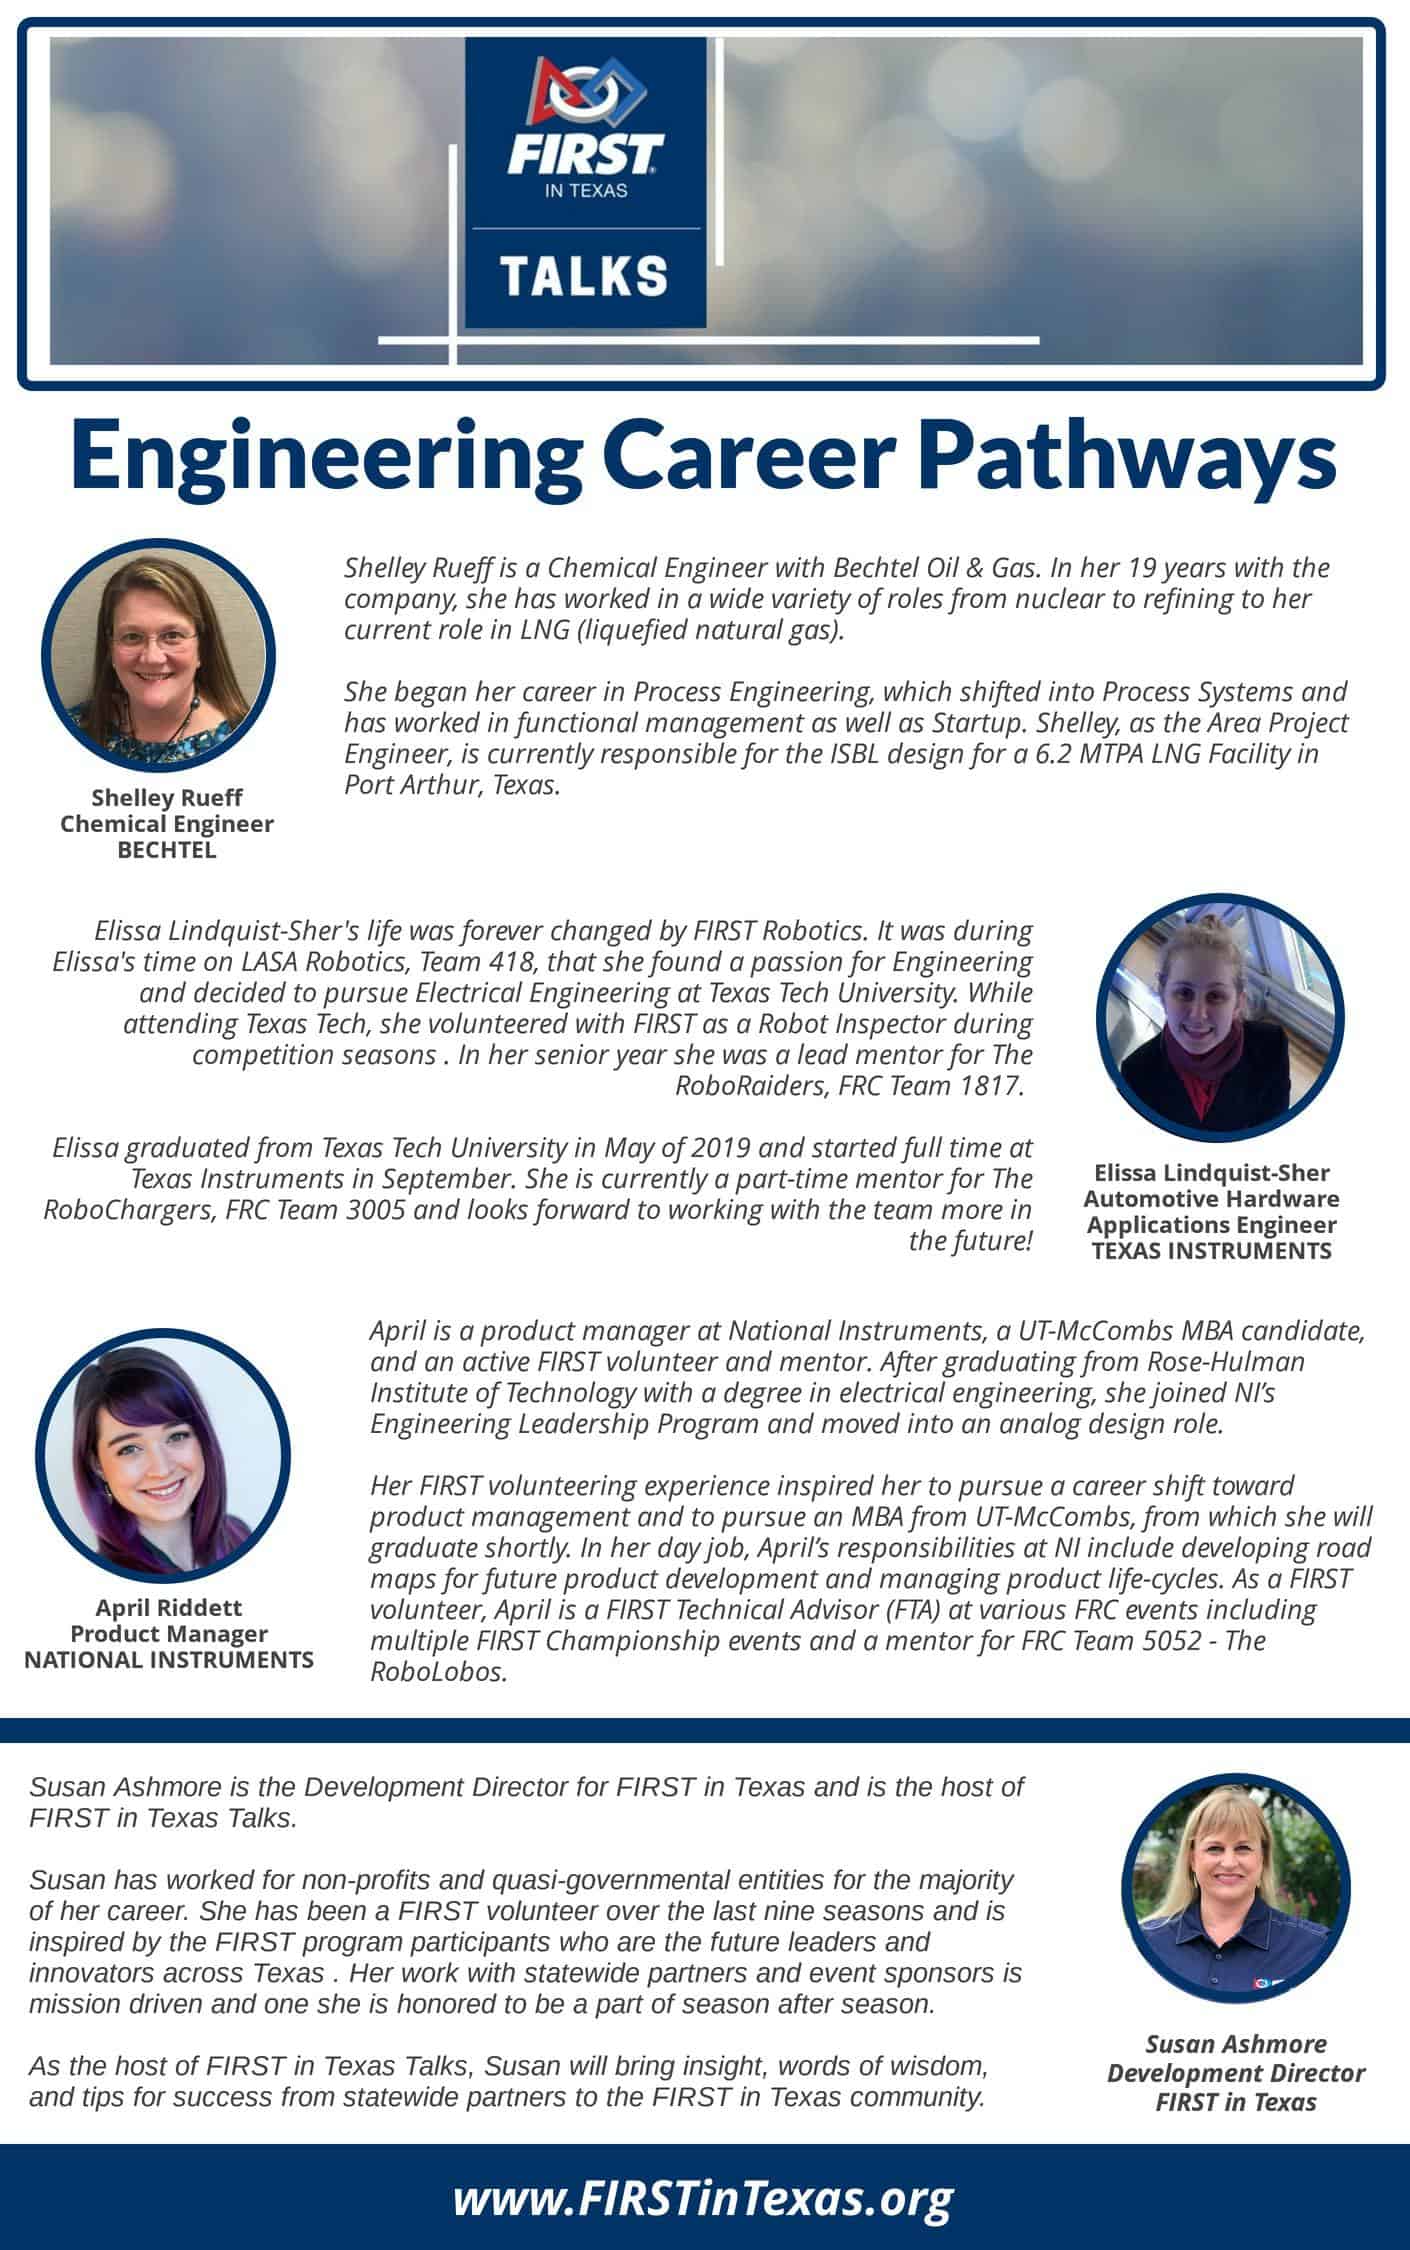 FIRST in Texas Talks Partner Panel: Engineering Career Pathways